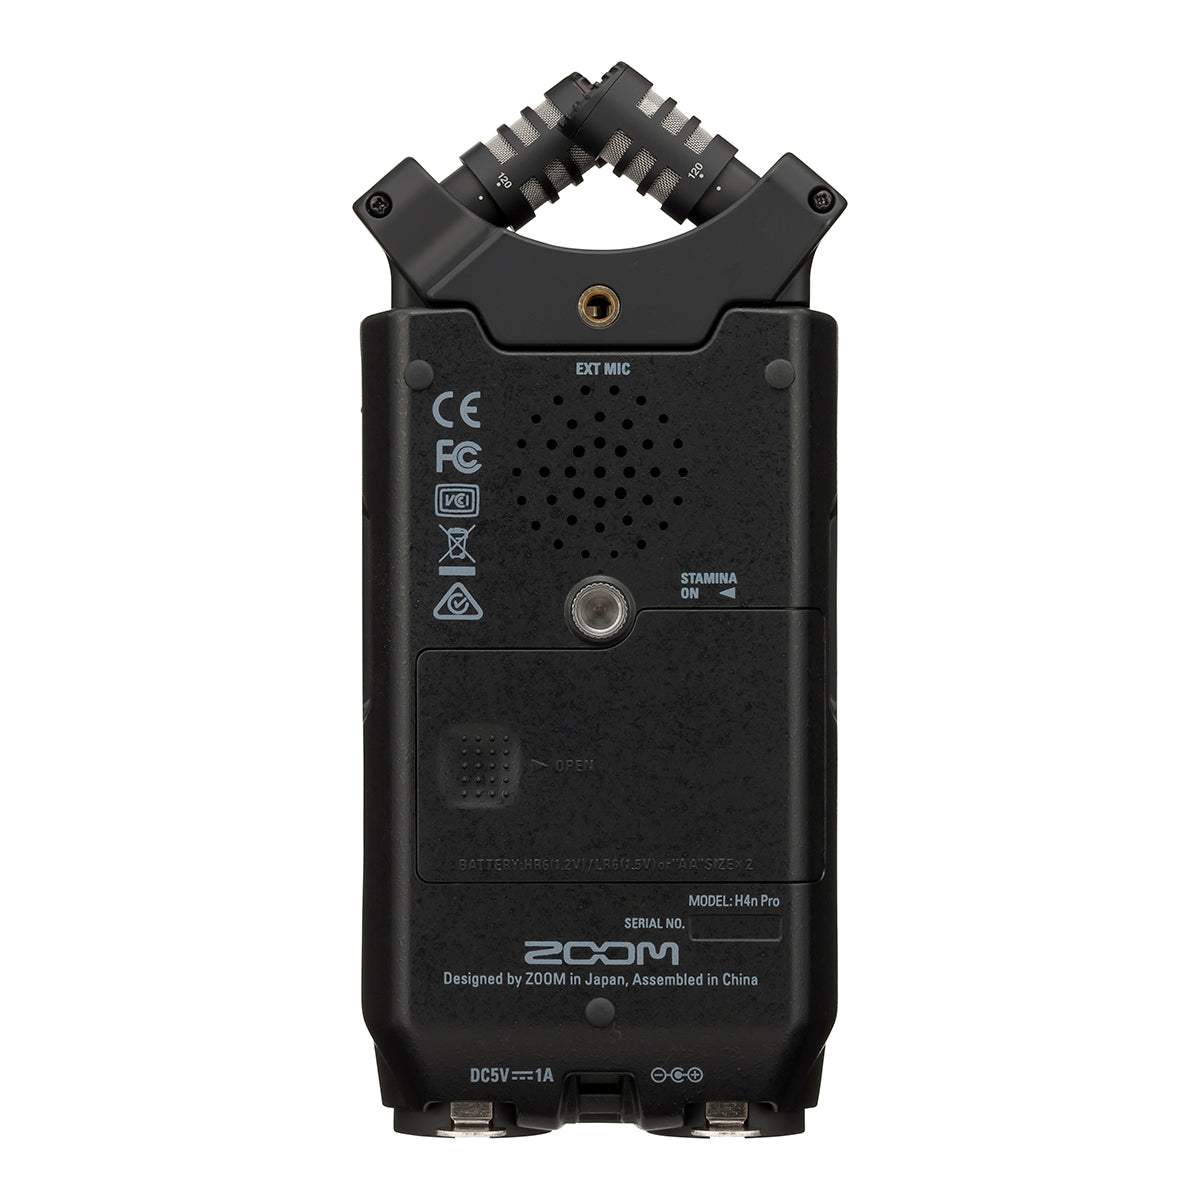 Zoom H4n Pro Handy Recorder (Black)